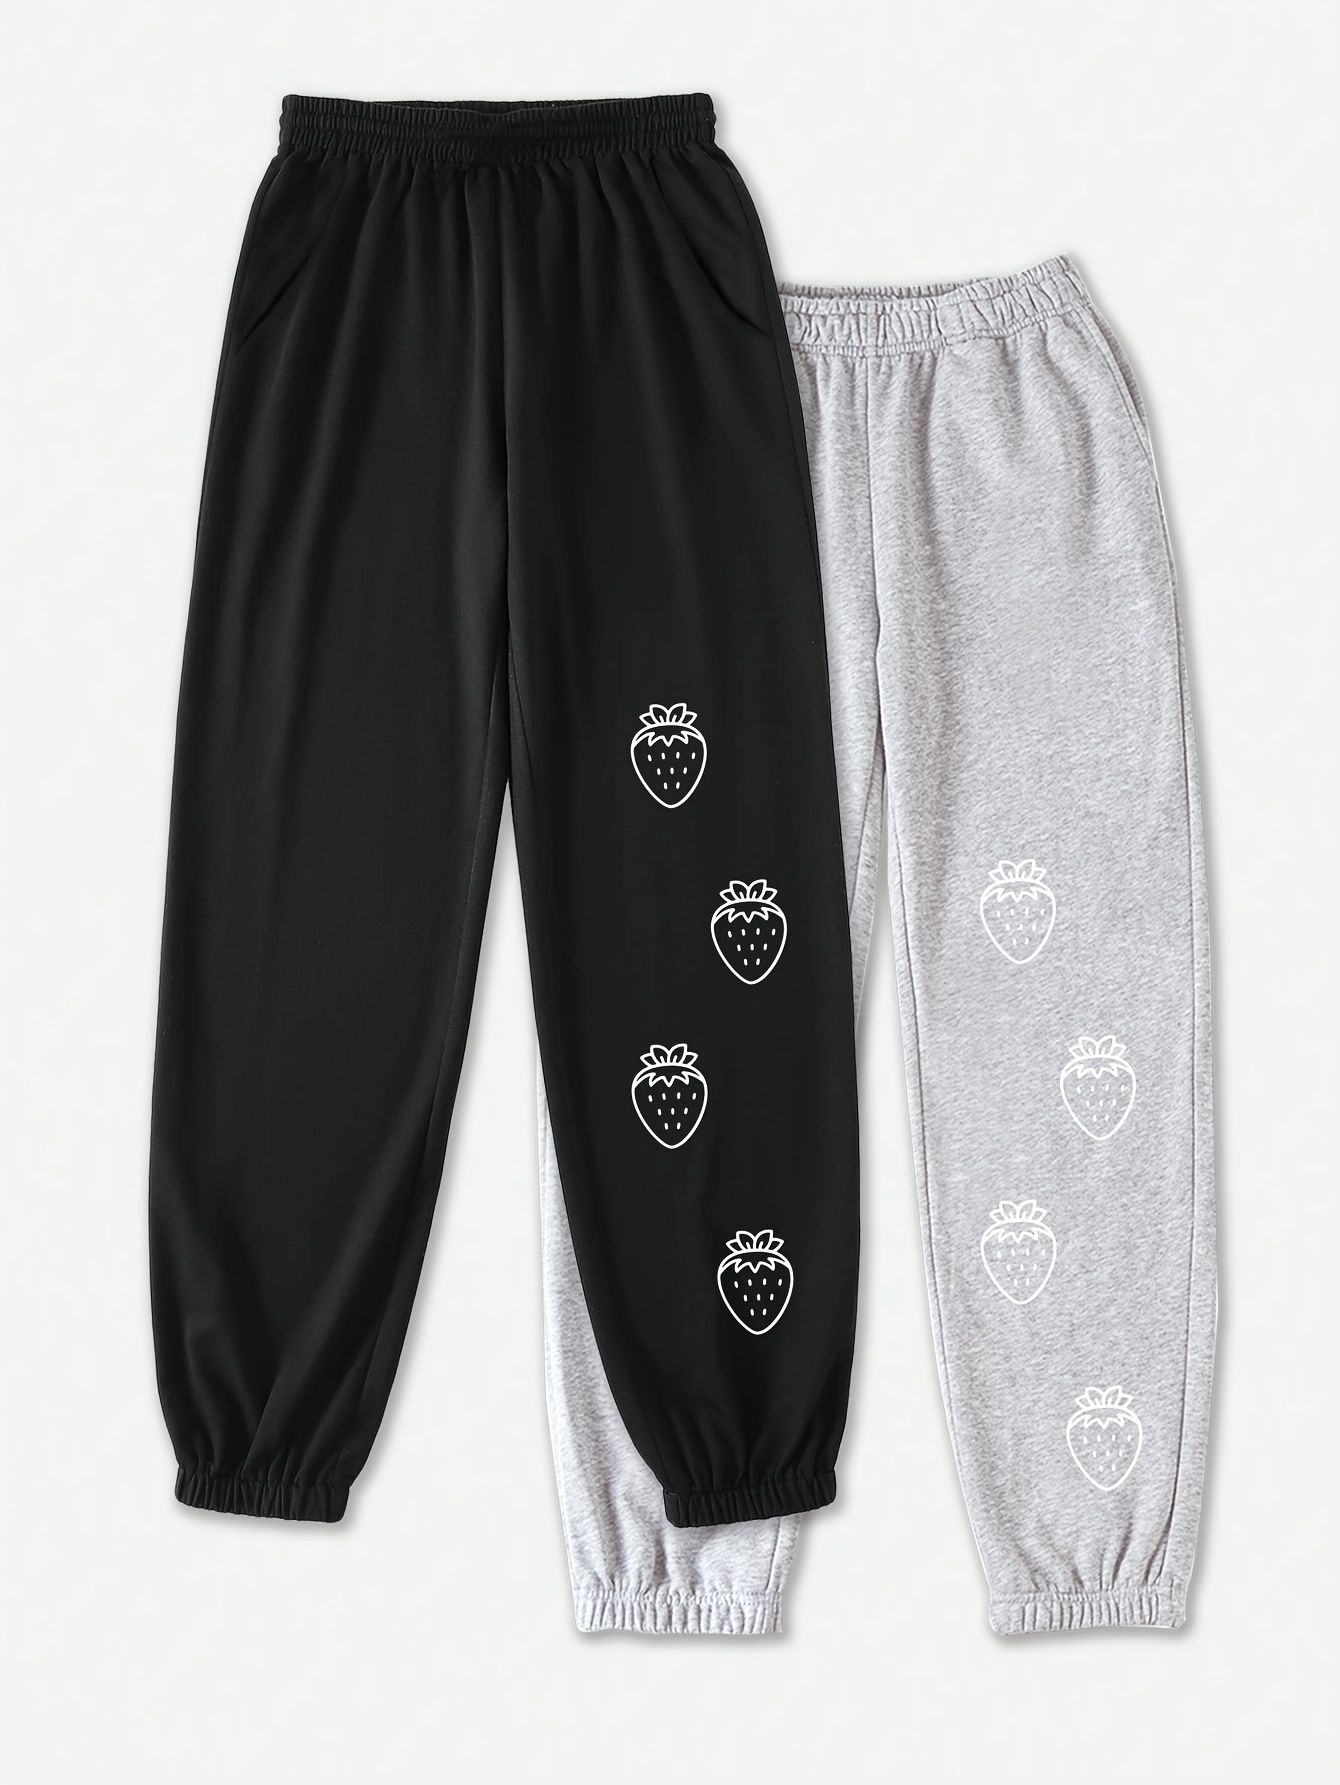 2-Piece Cute Pajamas Set, Strawberry Print Long-sleeve Pajama Top & Plaid  Comfy Long Pants, Women's Loungewear & Sleepwear